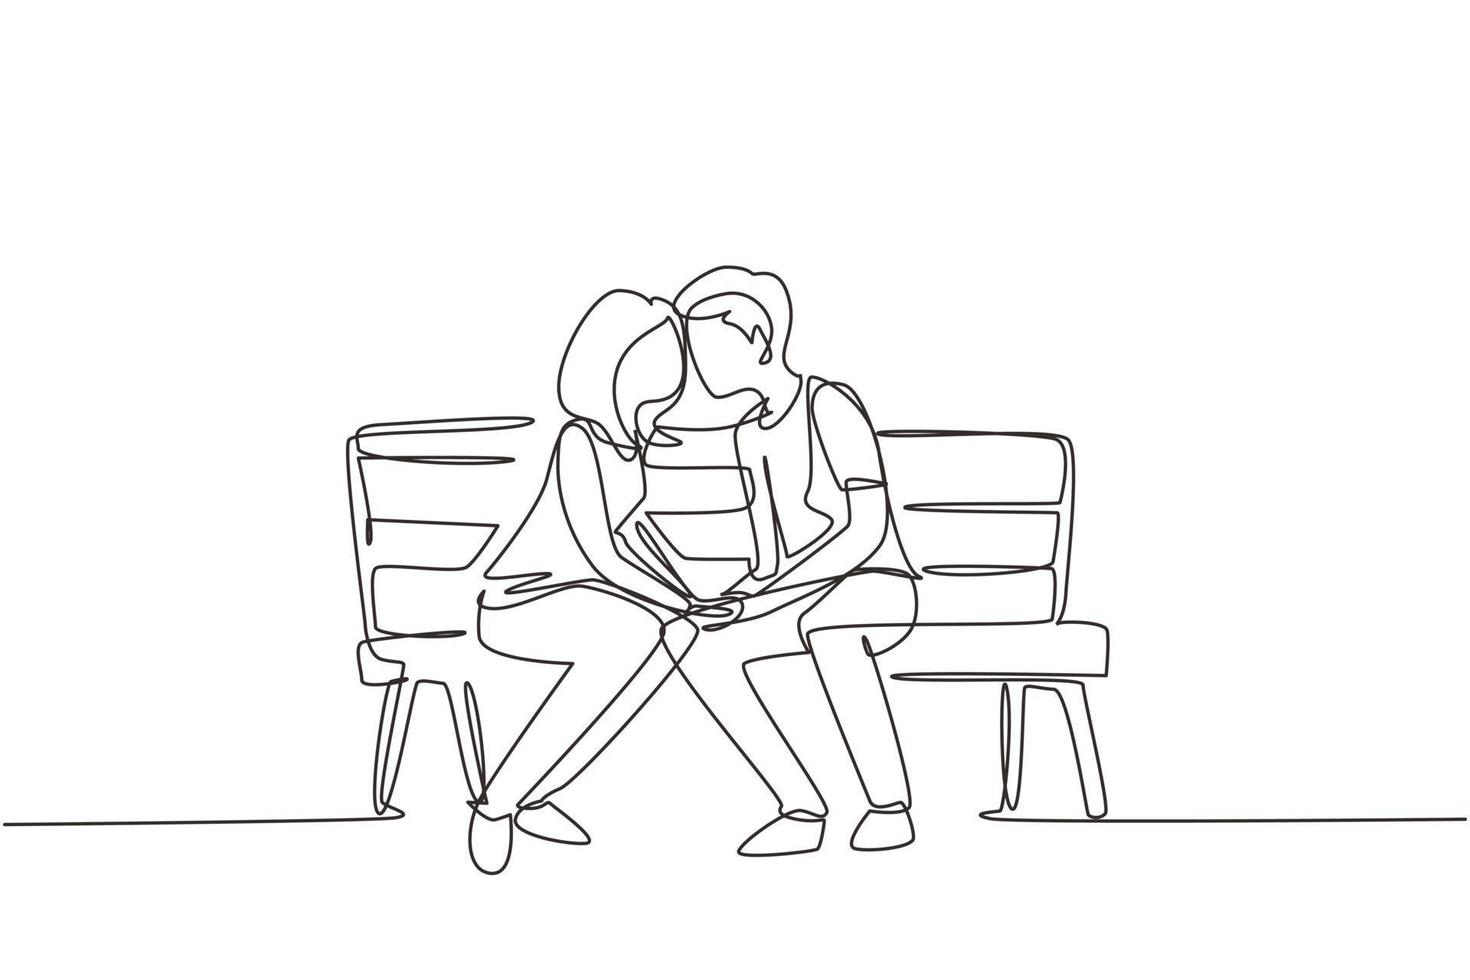 Dibujo a tinta de pareja besándose  Besos de parejas Dibujo a tinta  Dibujo de personas